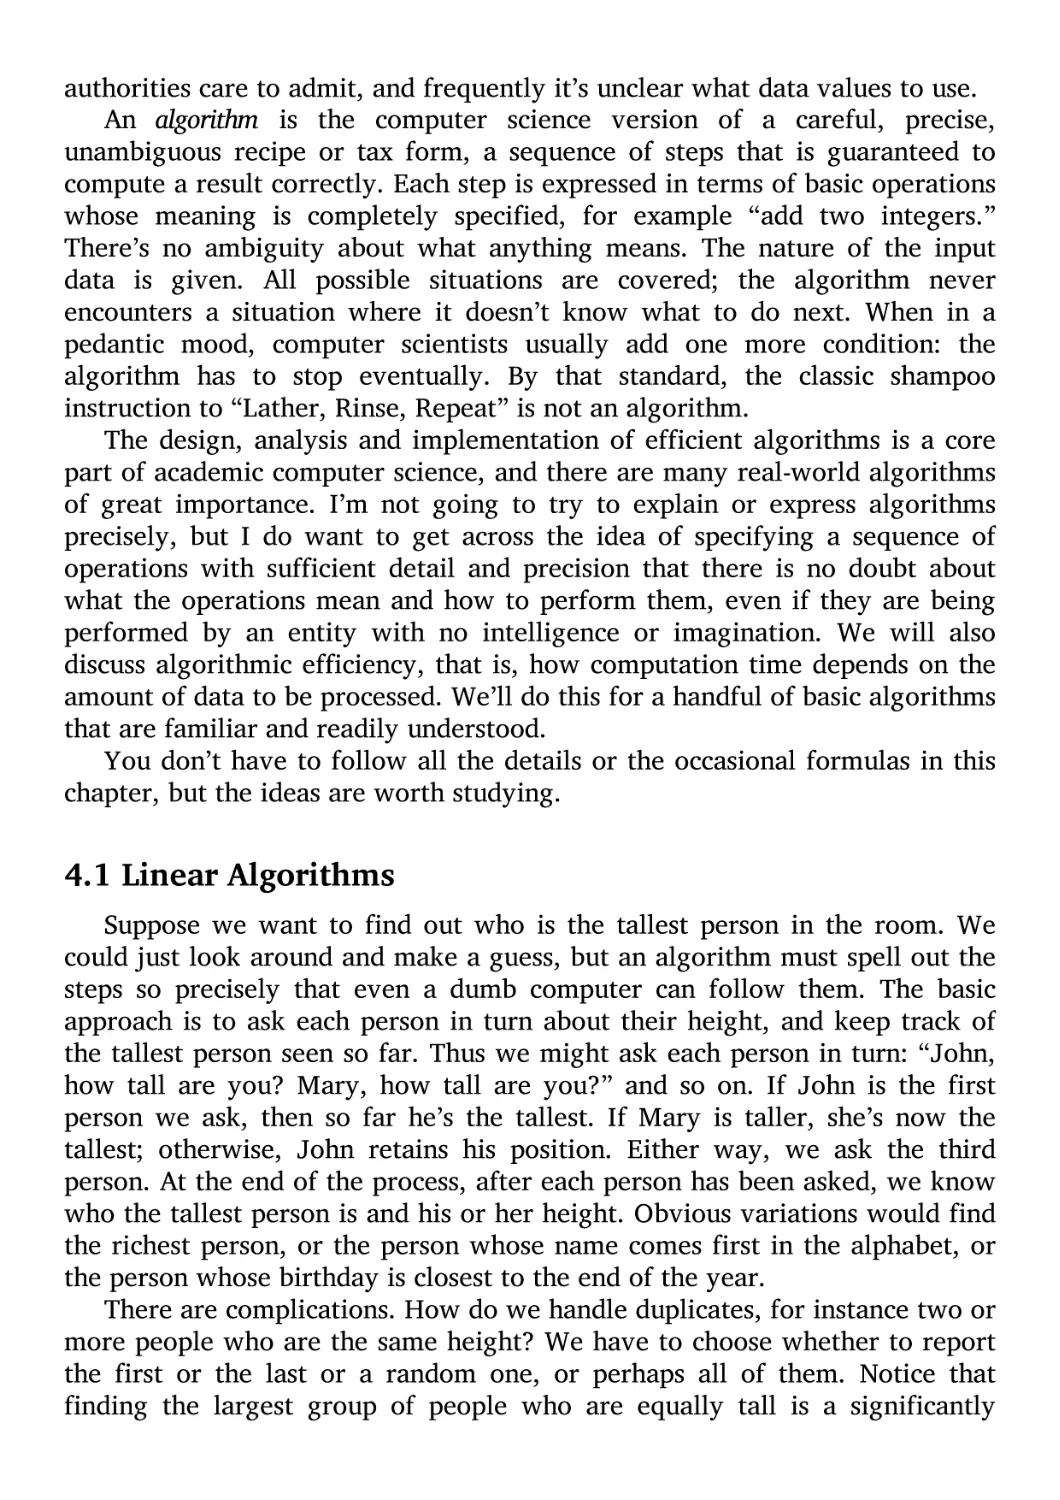 4.1 Linear Algorithms